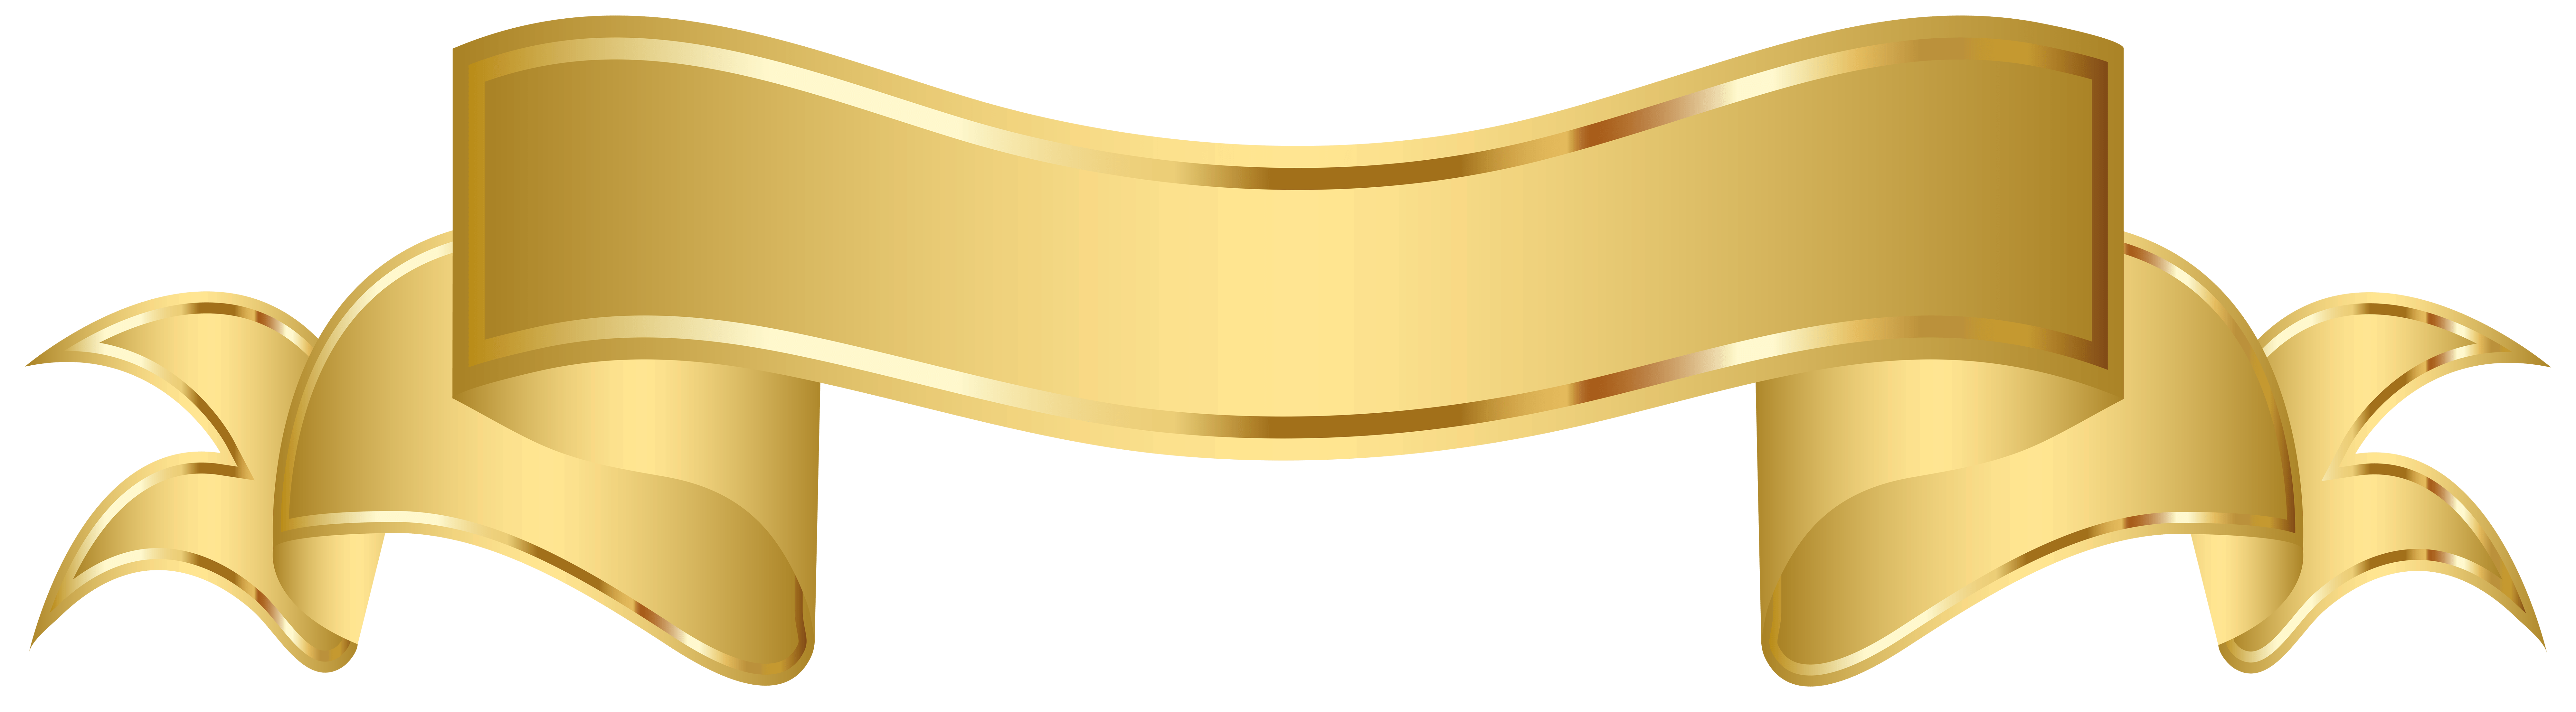 gold clipart banner